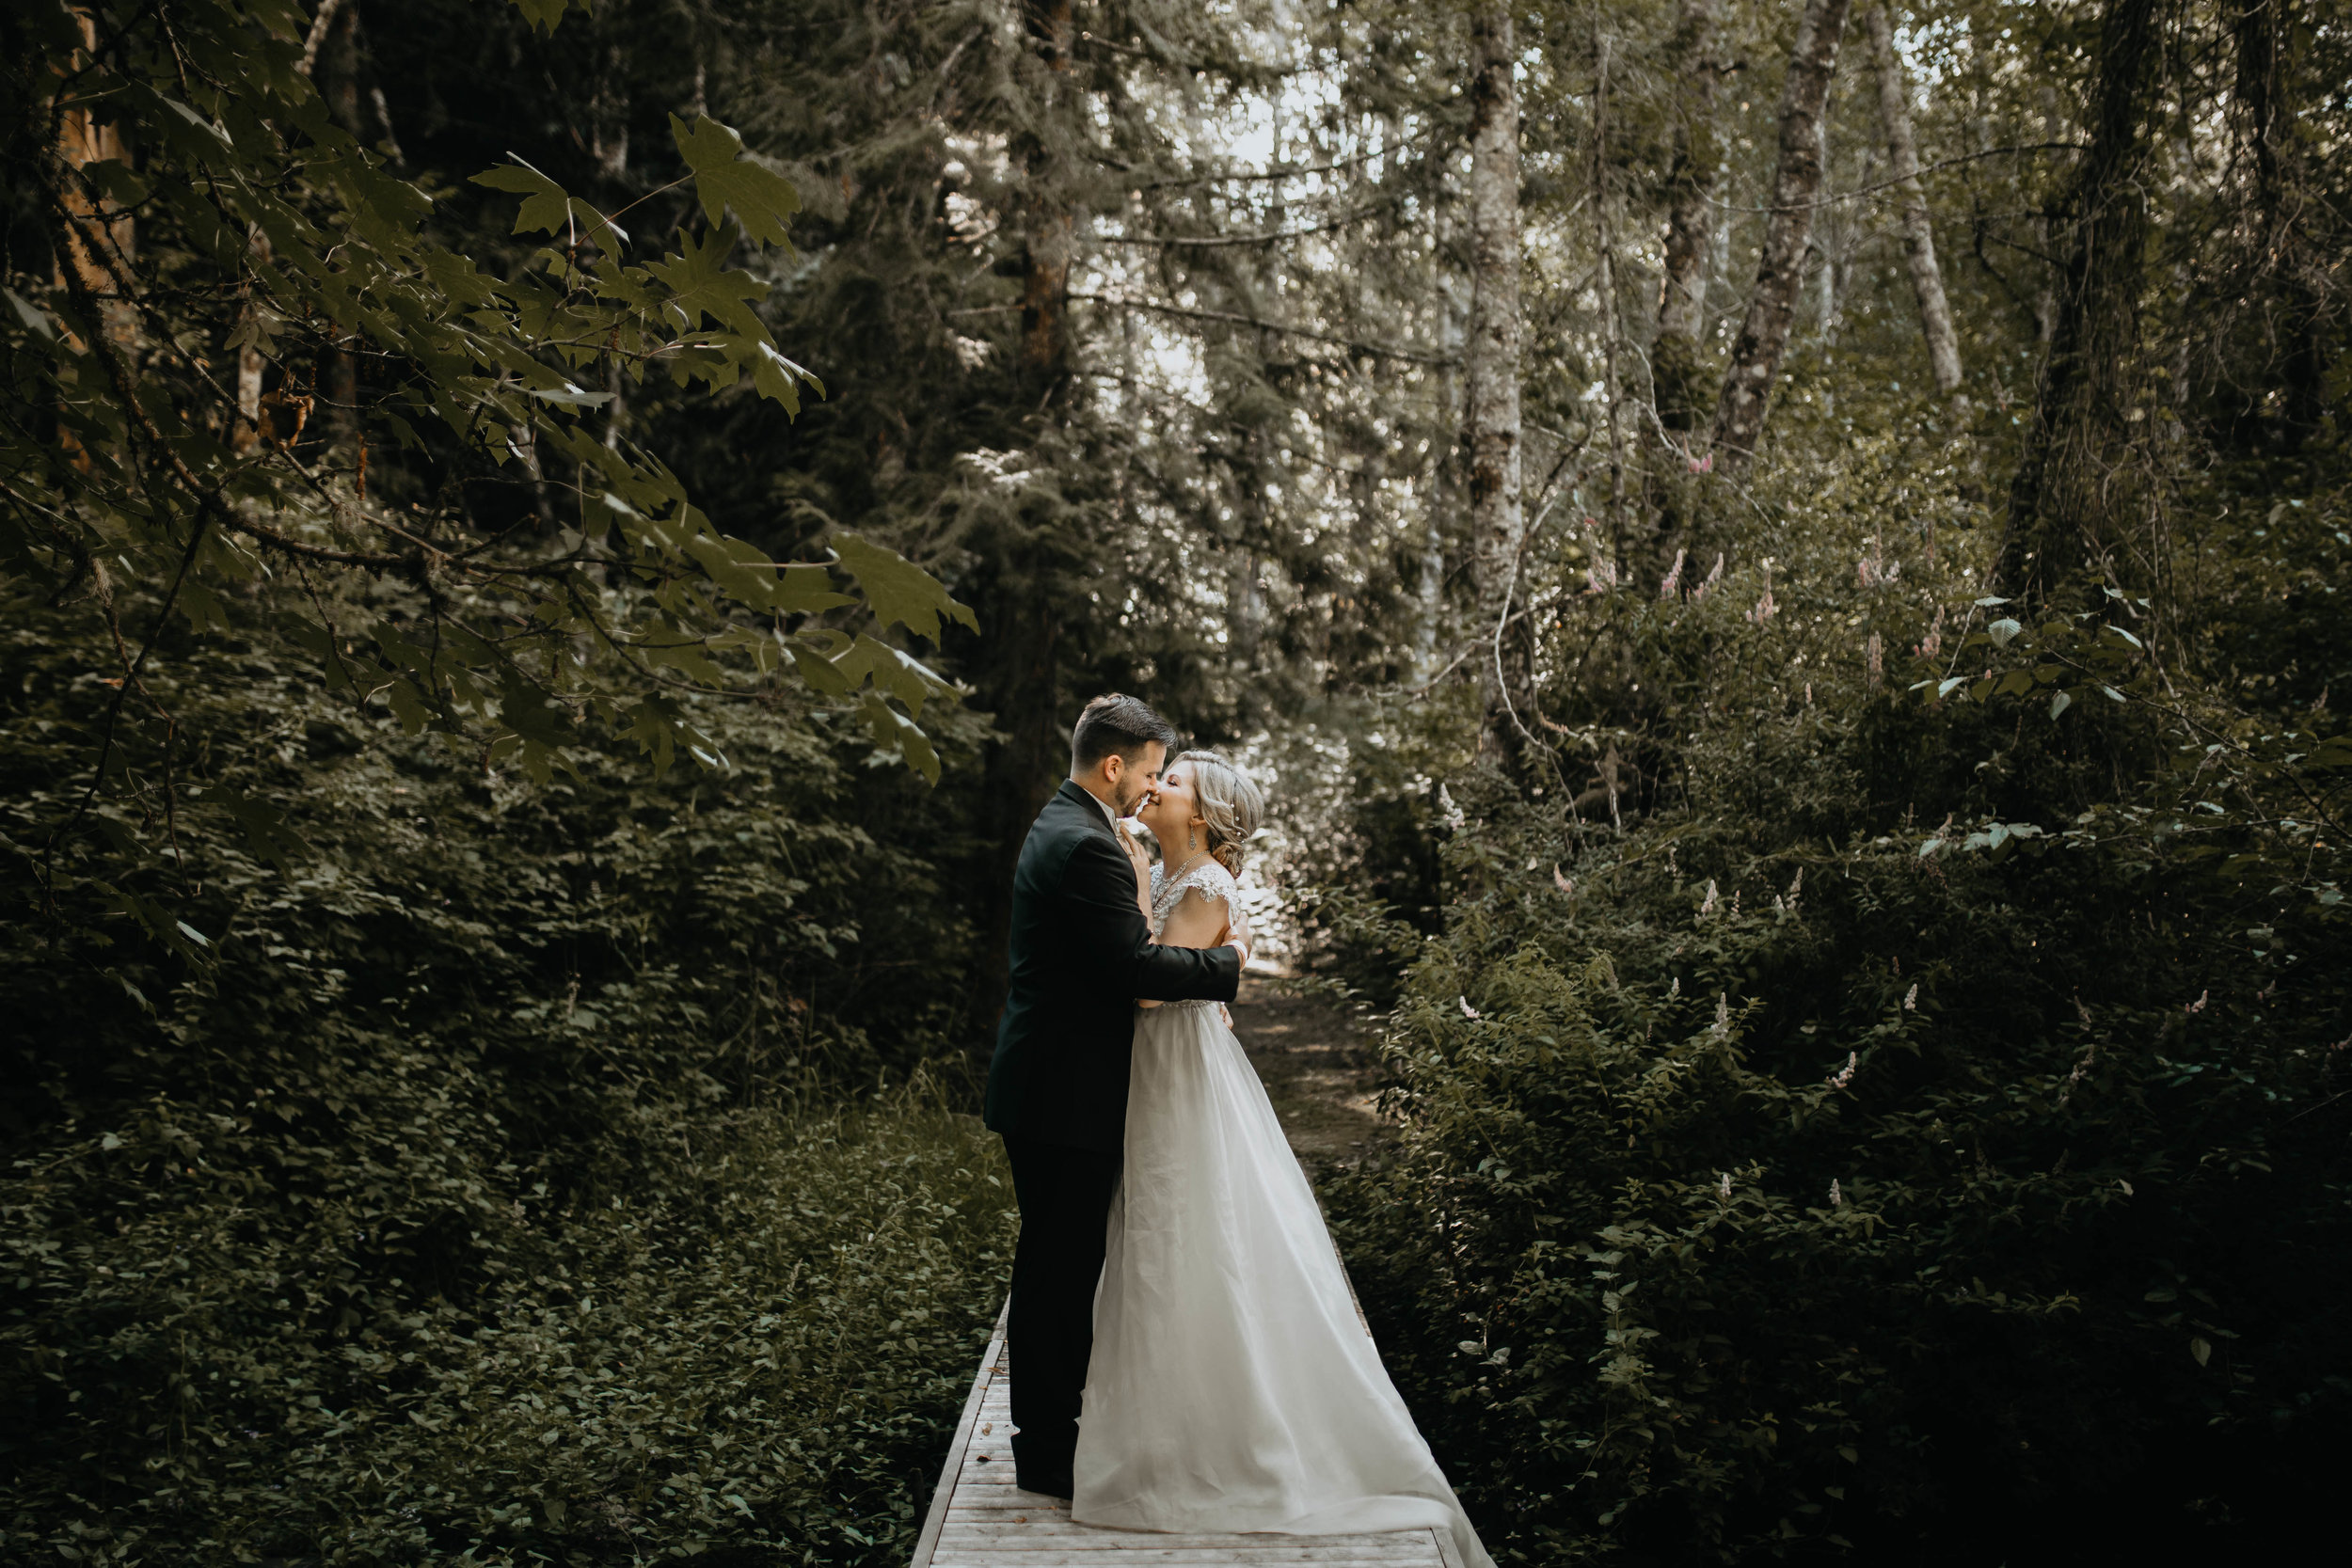 nicole-daacke-photography-kingston-house-bainbride-washington-wedding-photography-summer-wedding-lavendar-field-pacific-northwest-wedding-glam-forest-elopement-photographer-64.jpg